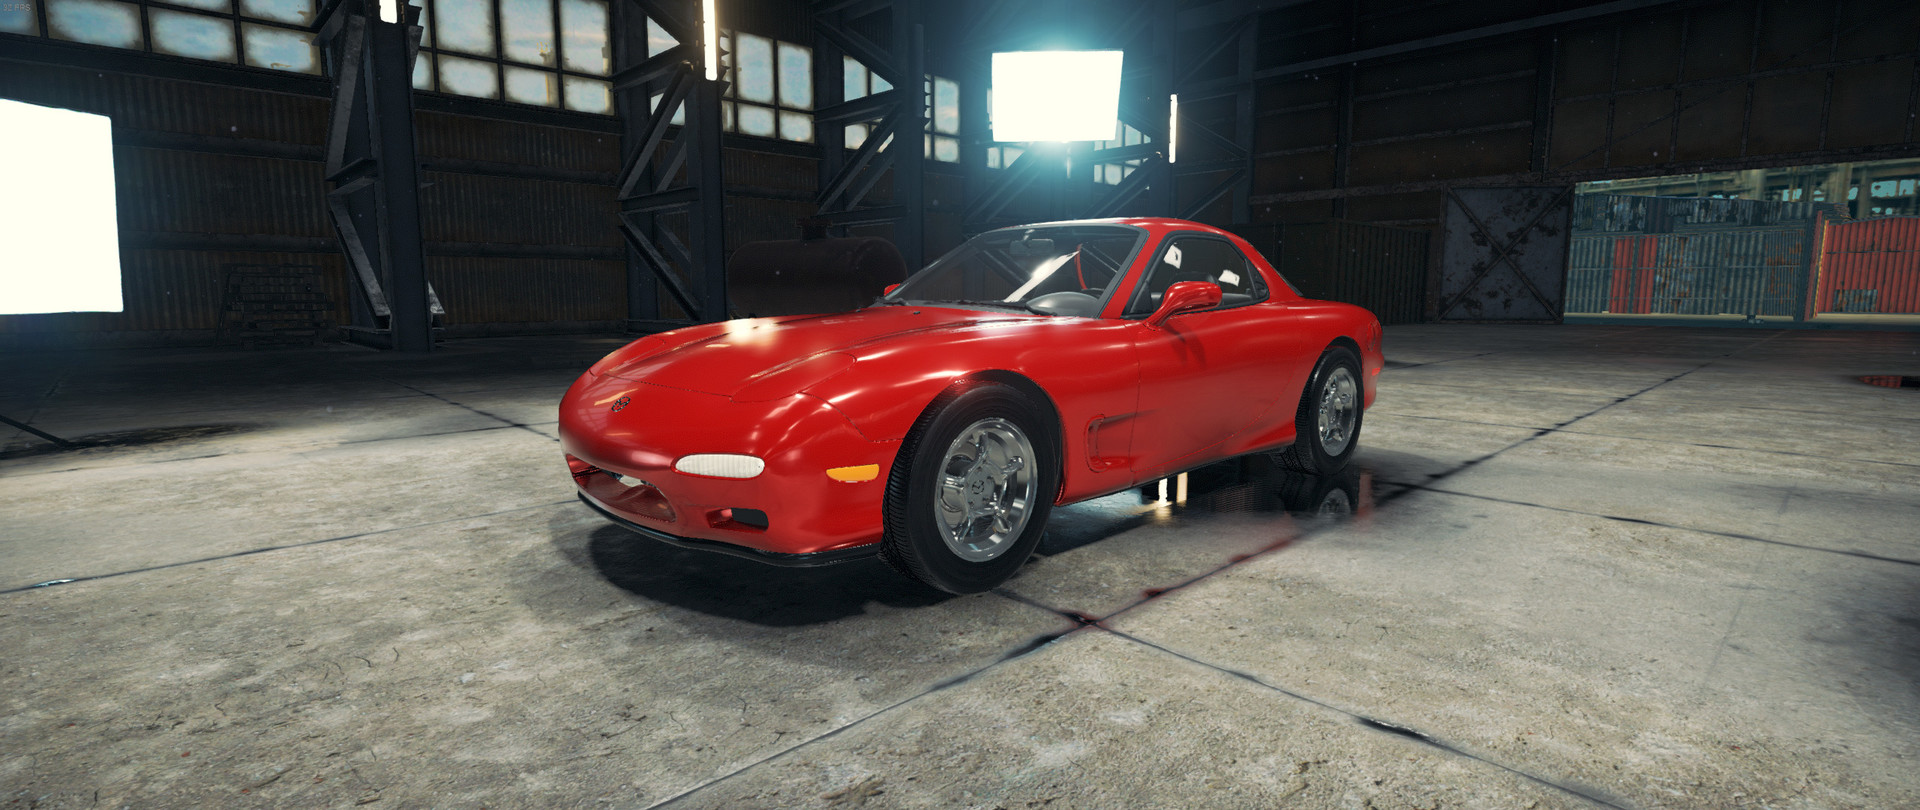 Ušetřete 67 % Na Produktu Car Mechanic Simulator 2018 - Mazda Dlc Ve Službě Steam